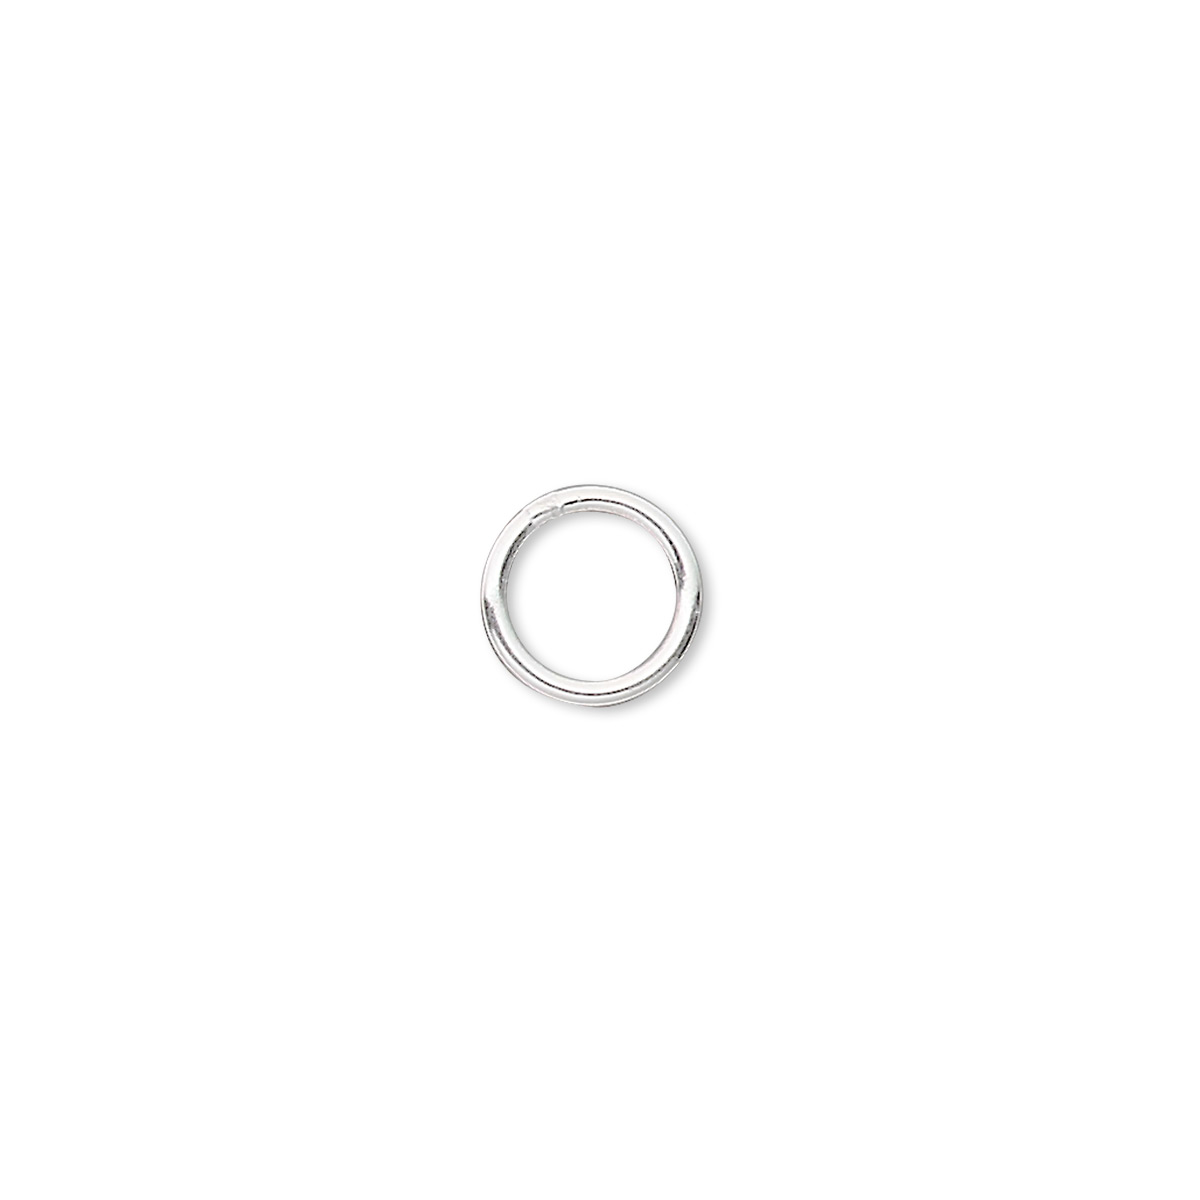 Jump ring, sterling silver-filled, 8mm soldered round, 6.2mm inside ...